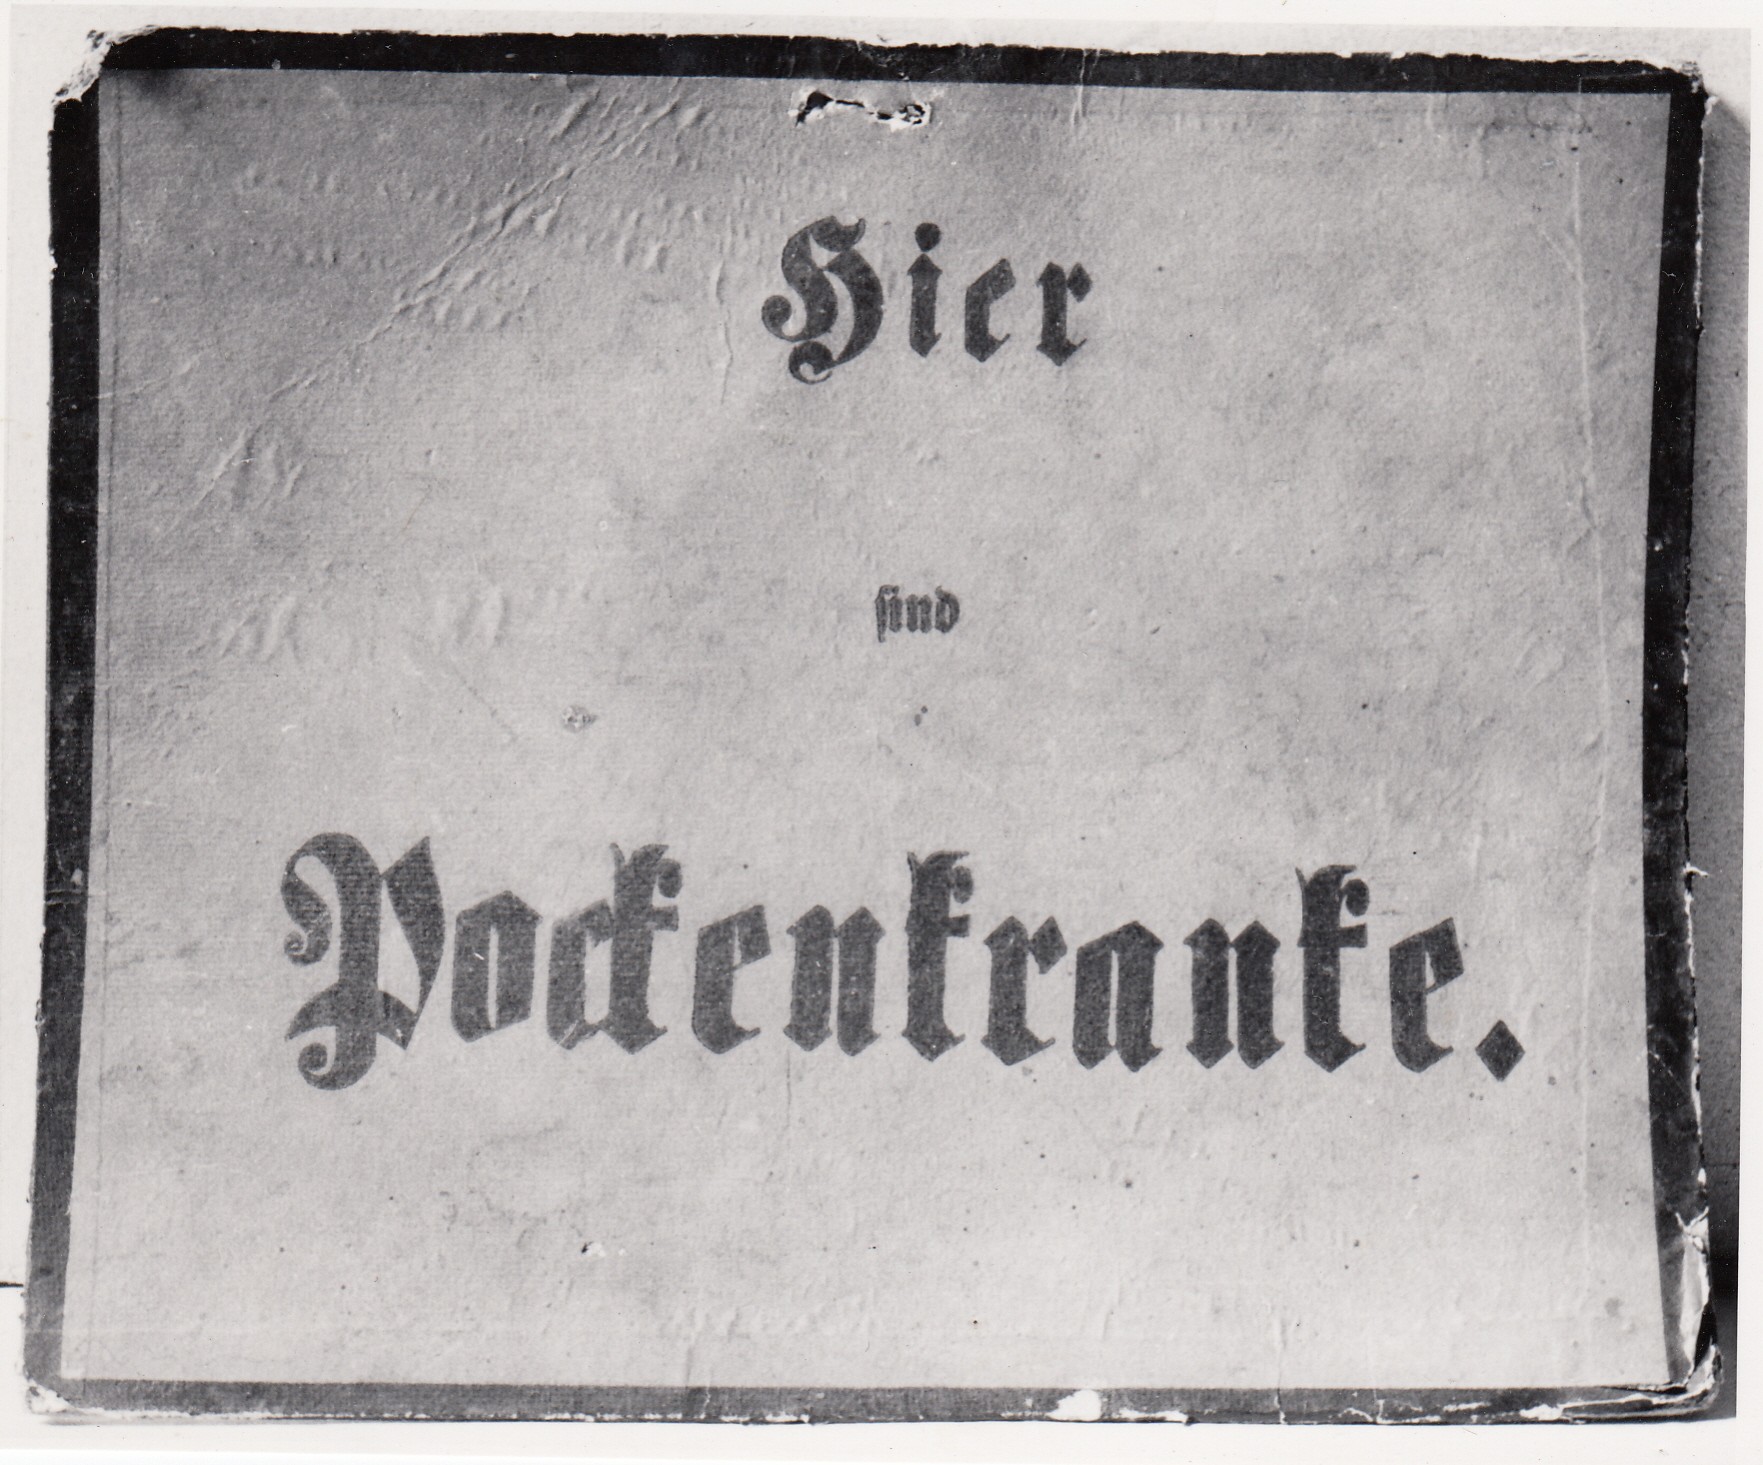 2489: Warnschild "Pockenkranke" (Museumsverband des Landes Brandenburg e.V. CC BY-NC-SA)